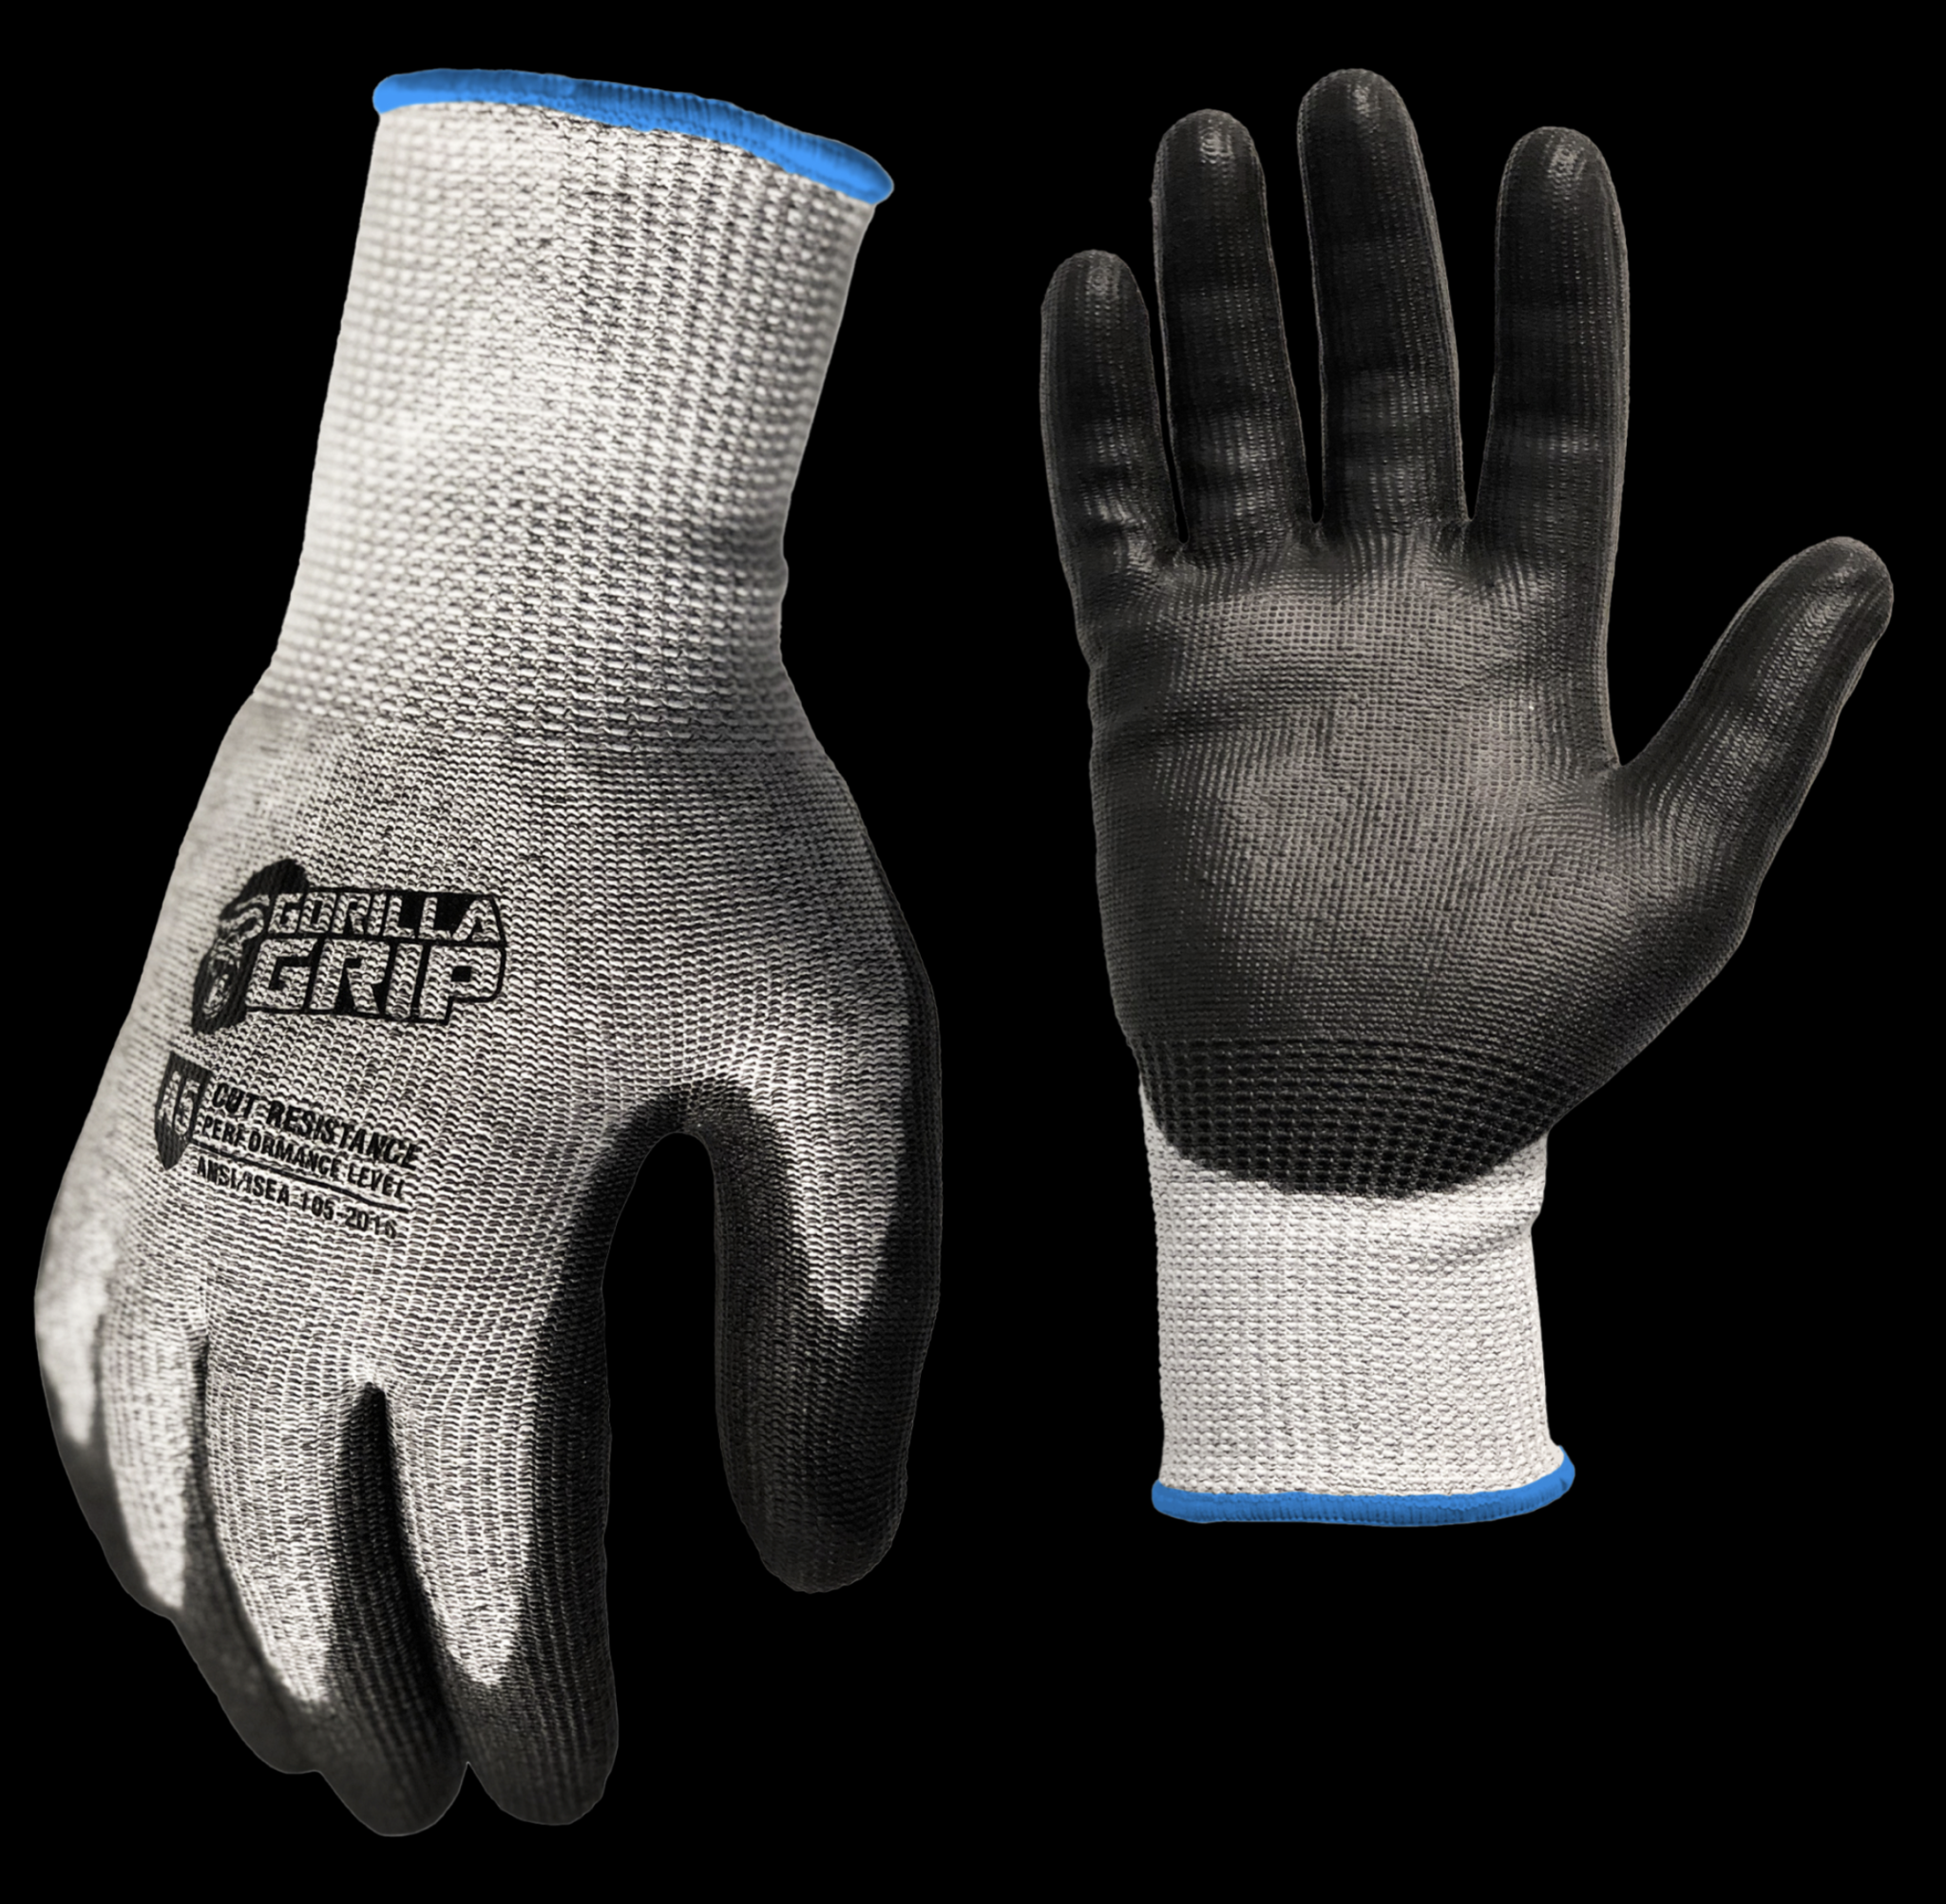 https://cdn.shoplightspeed.com/shops/641118/files/56210924/gorilla-grip-cut-protection-gloves.jpg